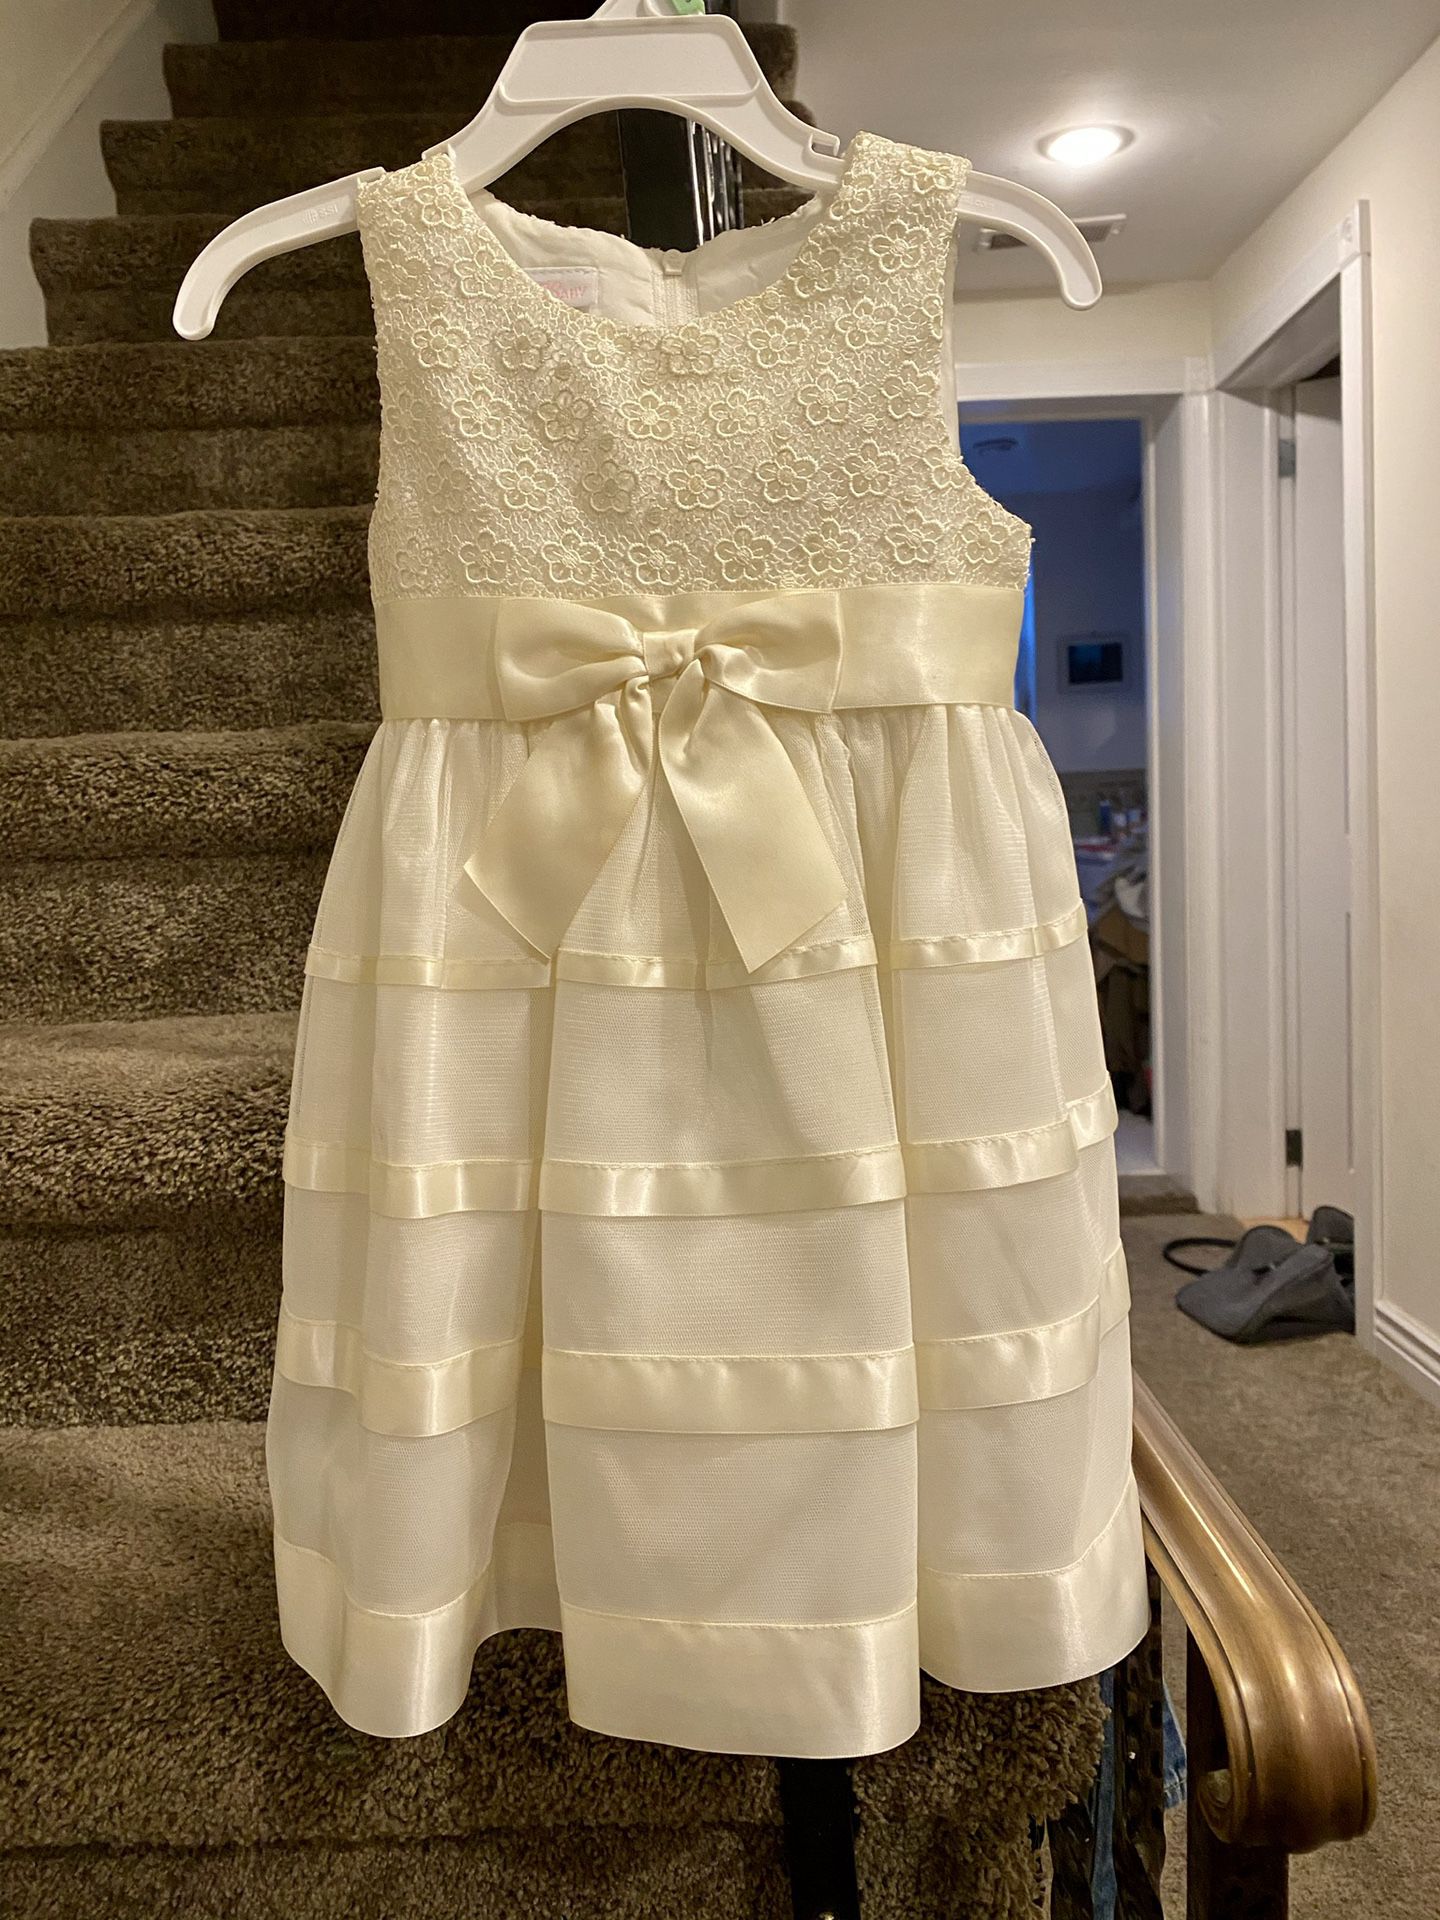 Flower Girl Dress Fancy/Party Dress 18 months.